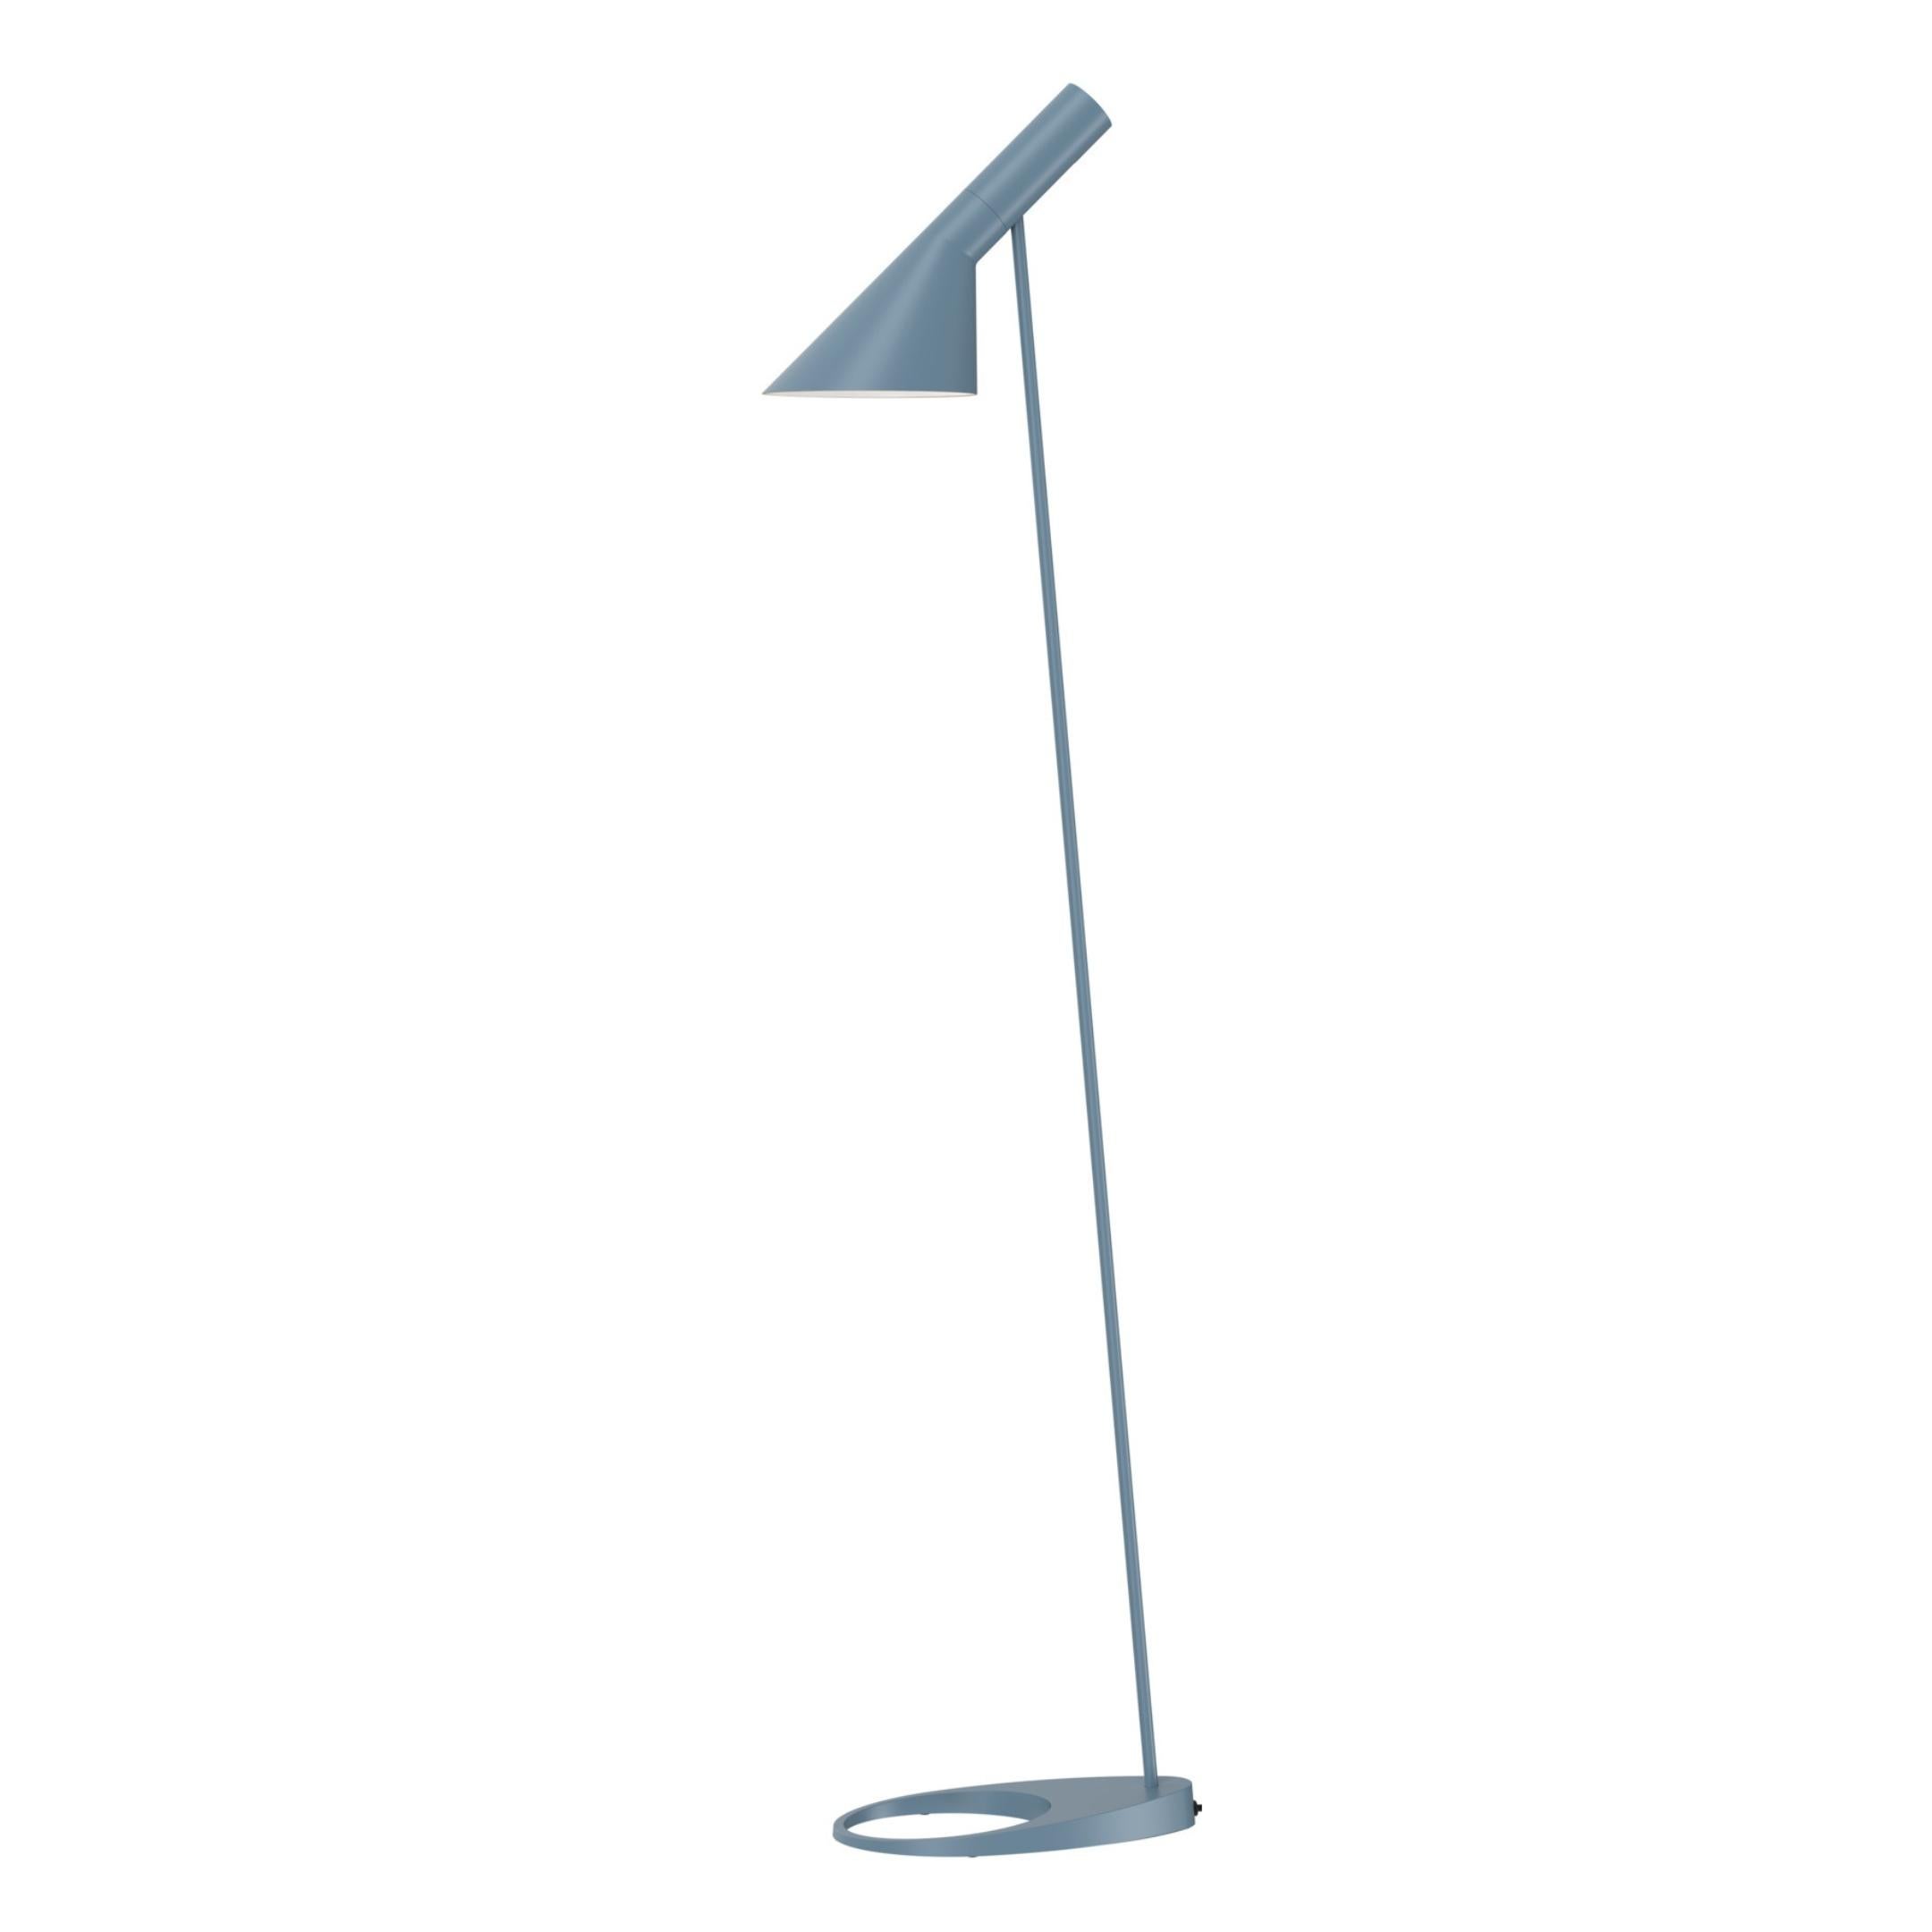 Arne Jacobsen AJ Floor Lamp in Pale Petroleum for Louis Poulsen For Sale 5